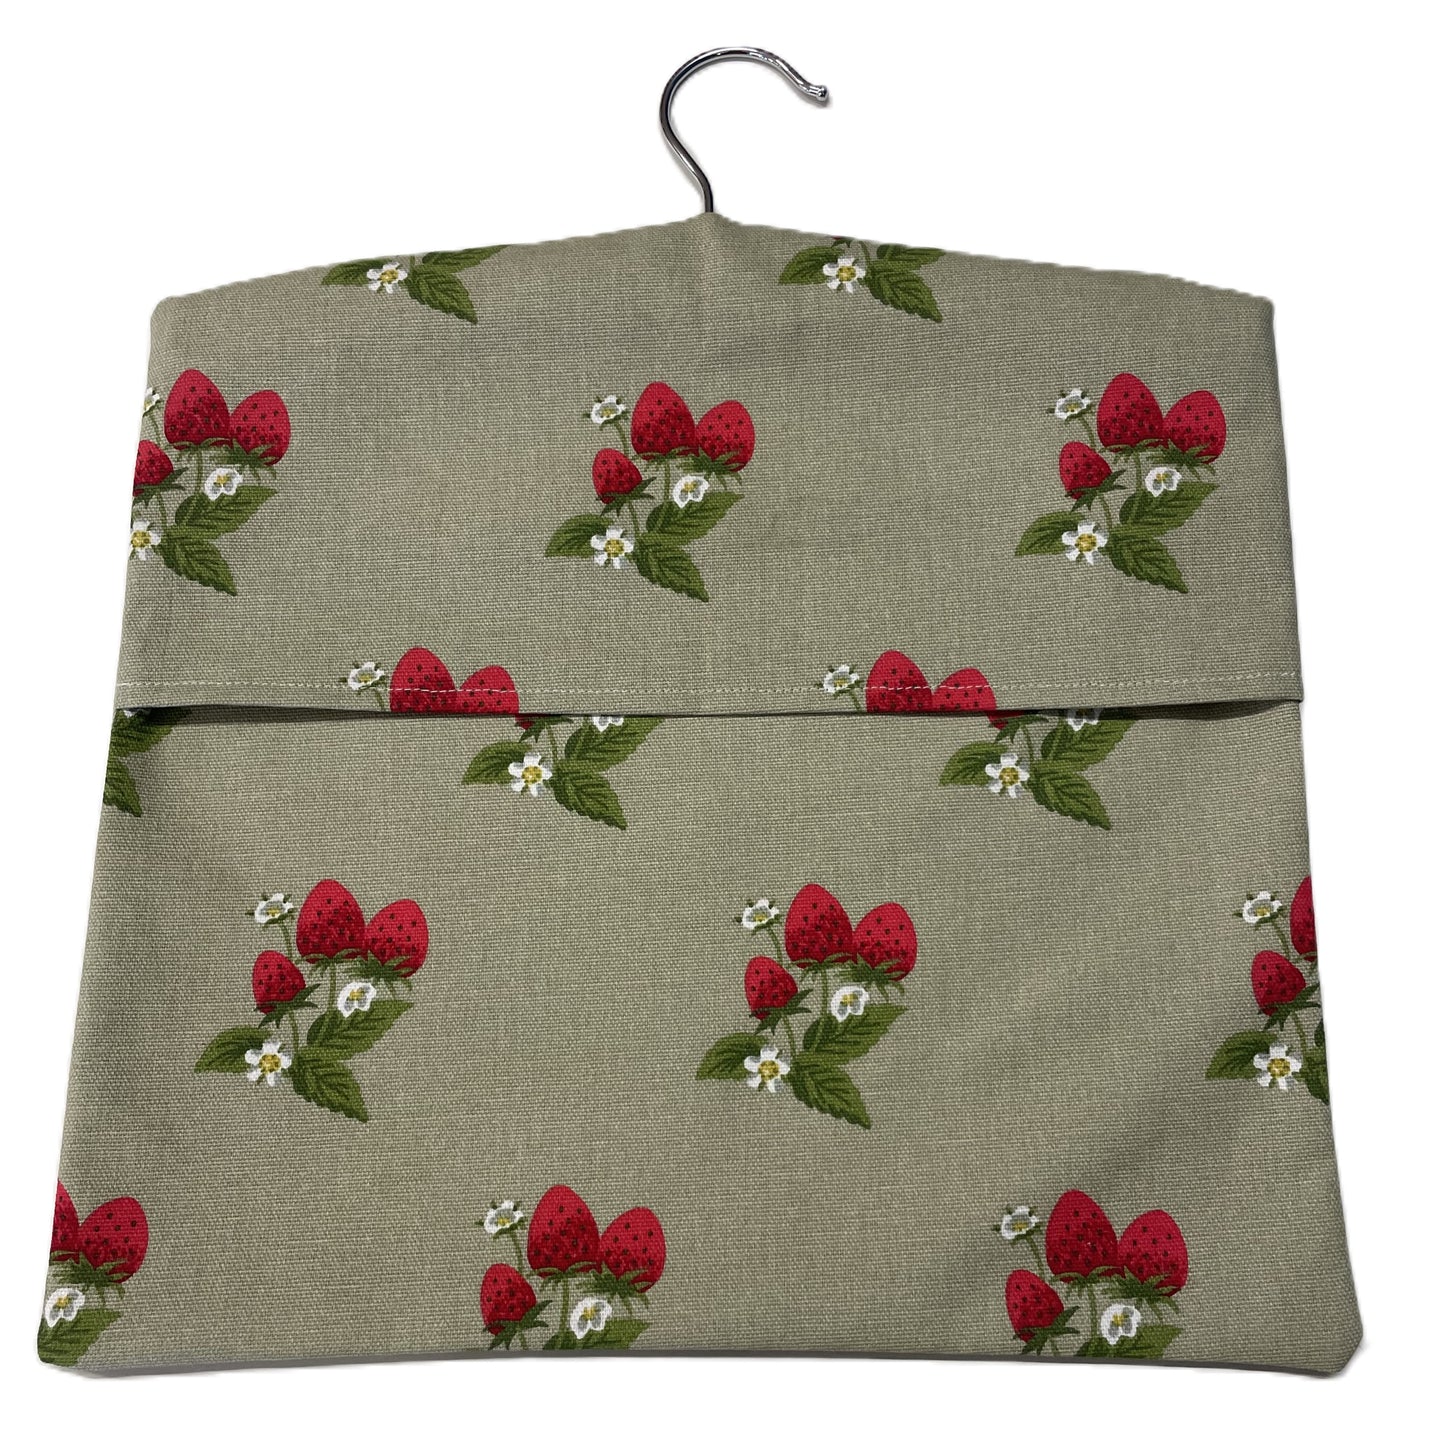 Raspberry Leaf Interiors Handmade Fabric Peg Bag Sophie Allport Strawberries